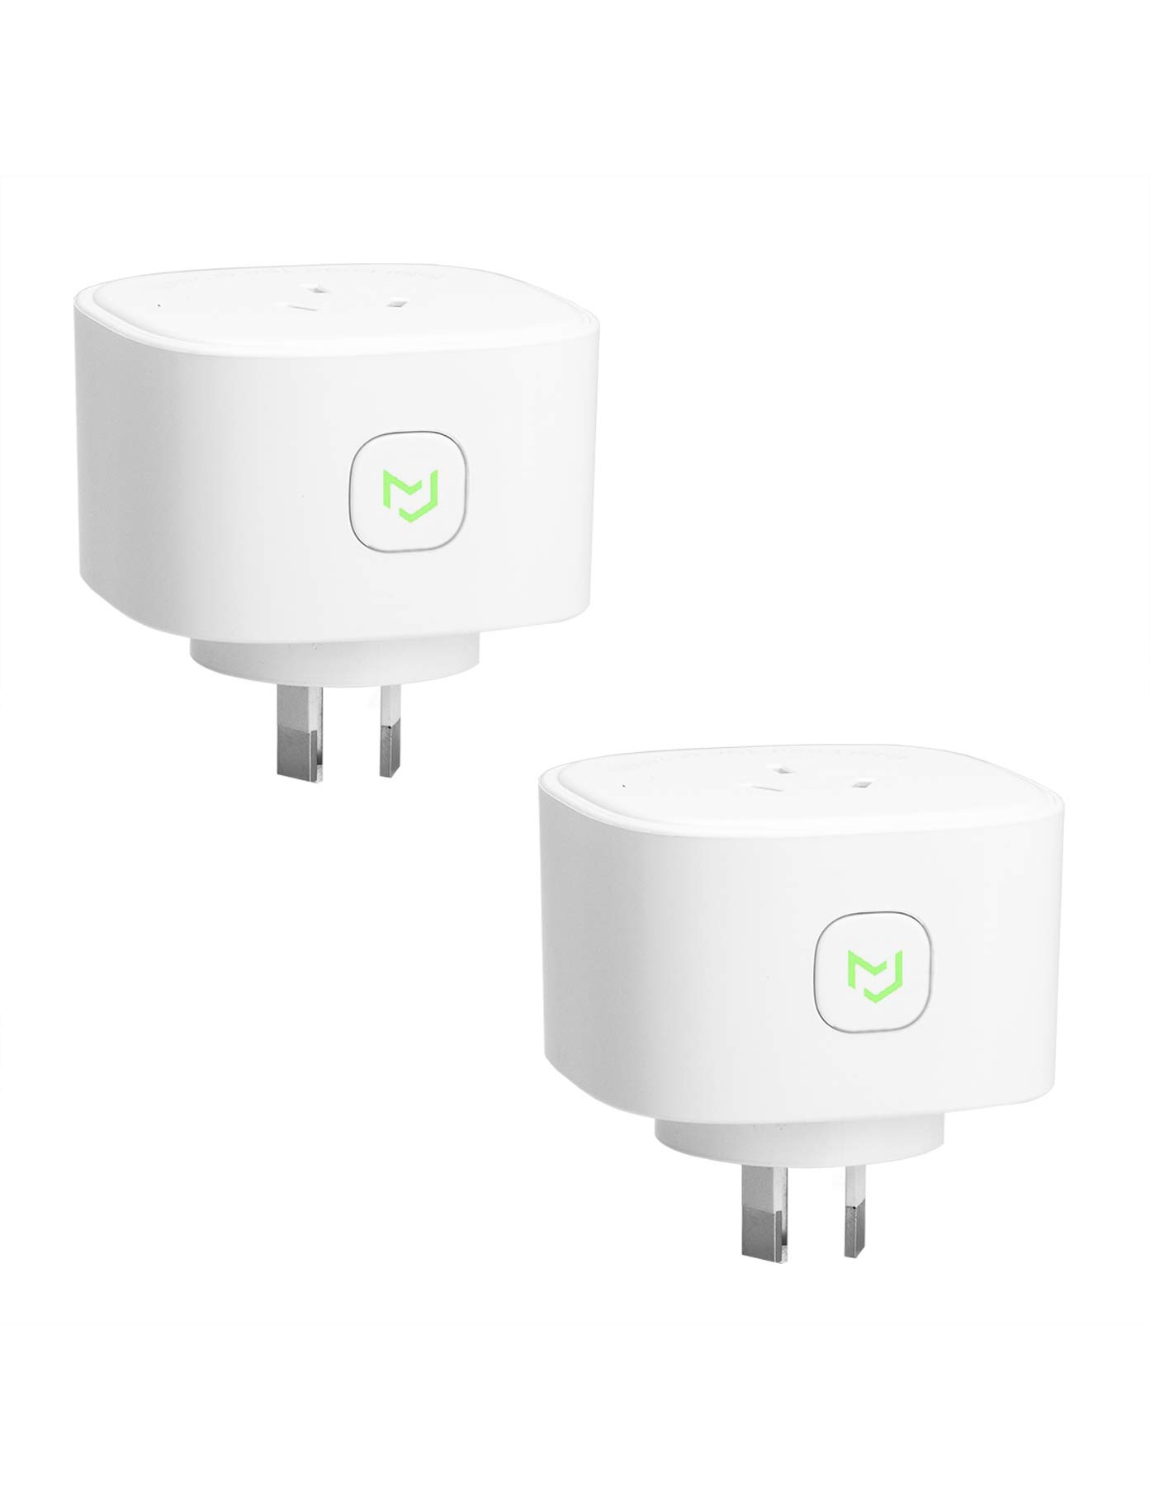 Meross 2 in 1 Smart Wi-Fi Plug, MSS120BHK (US/CA Version) – Meross Official  Store